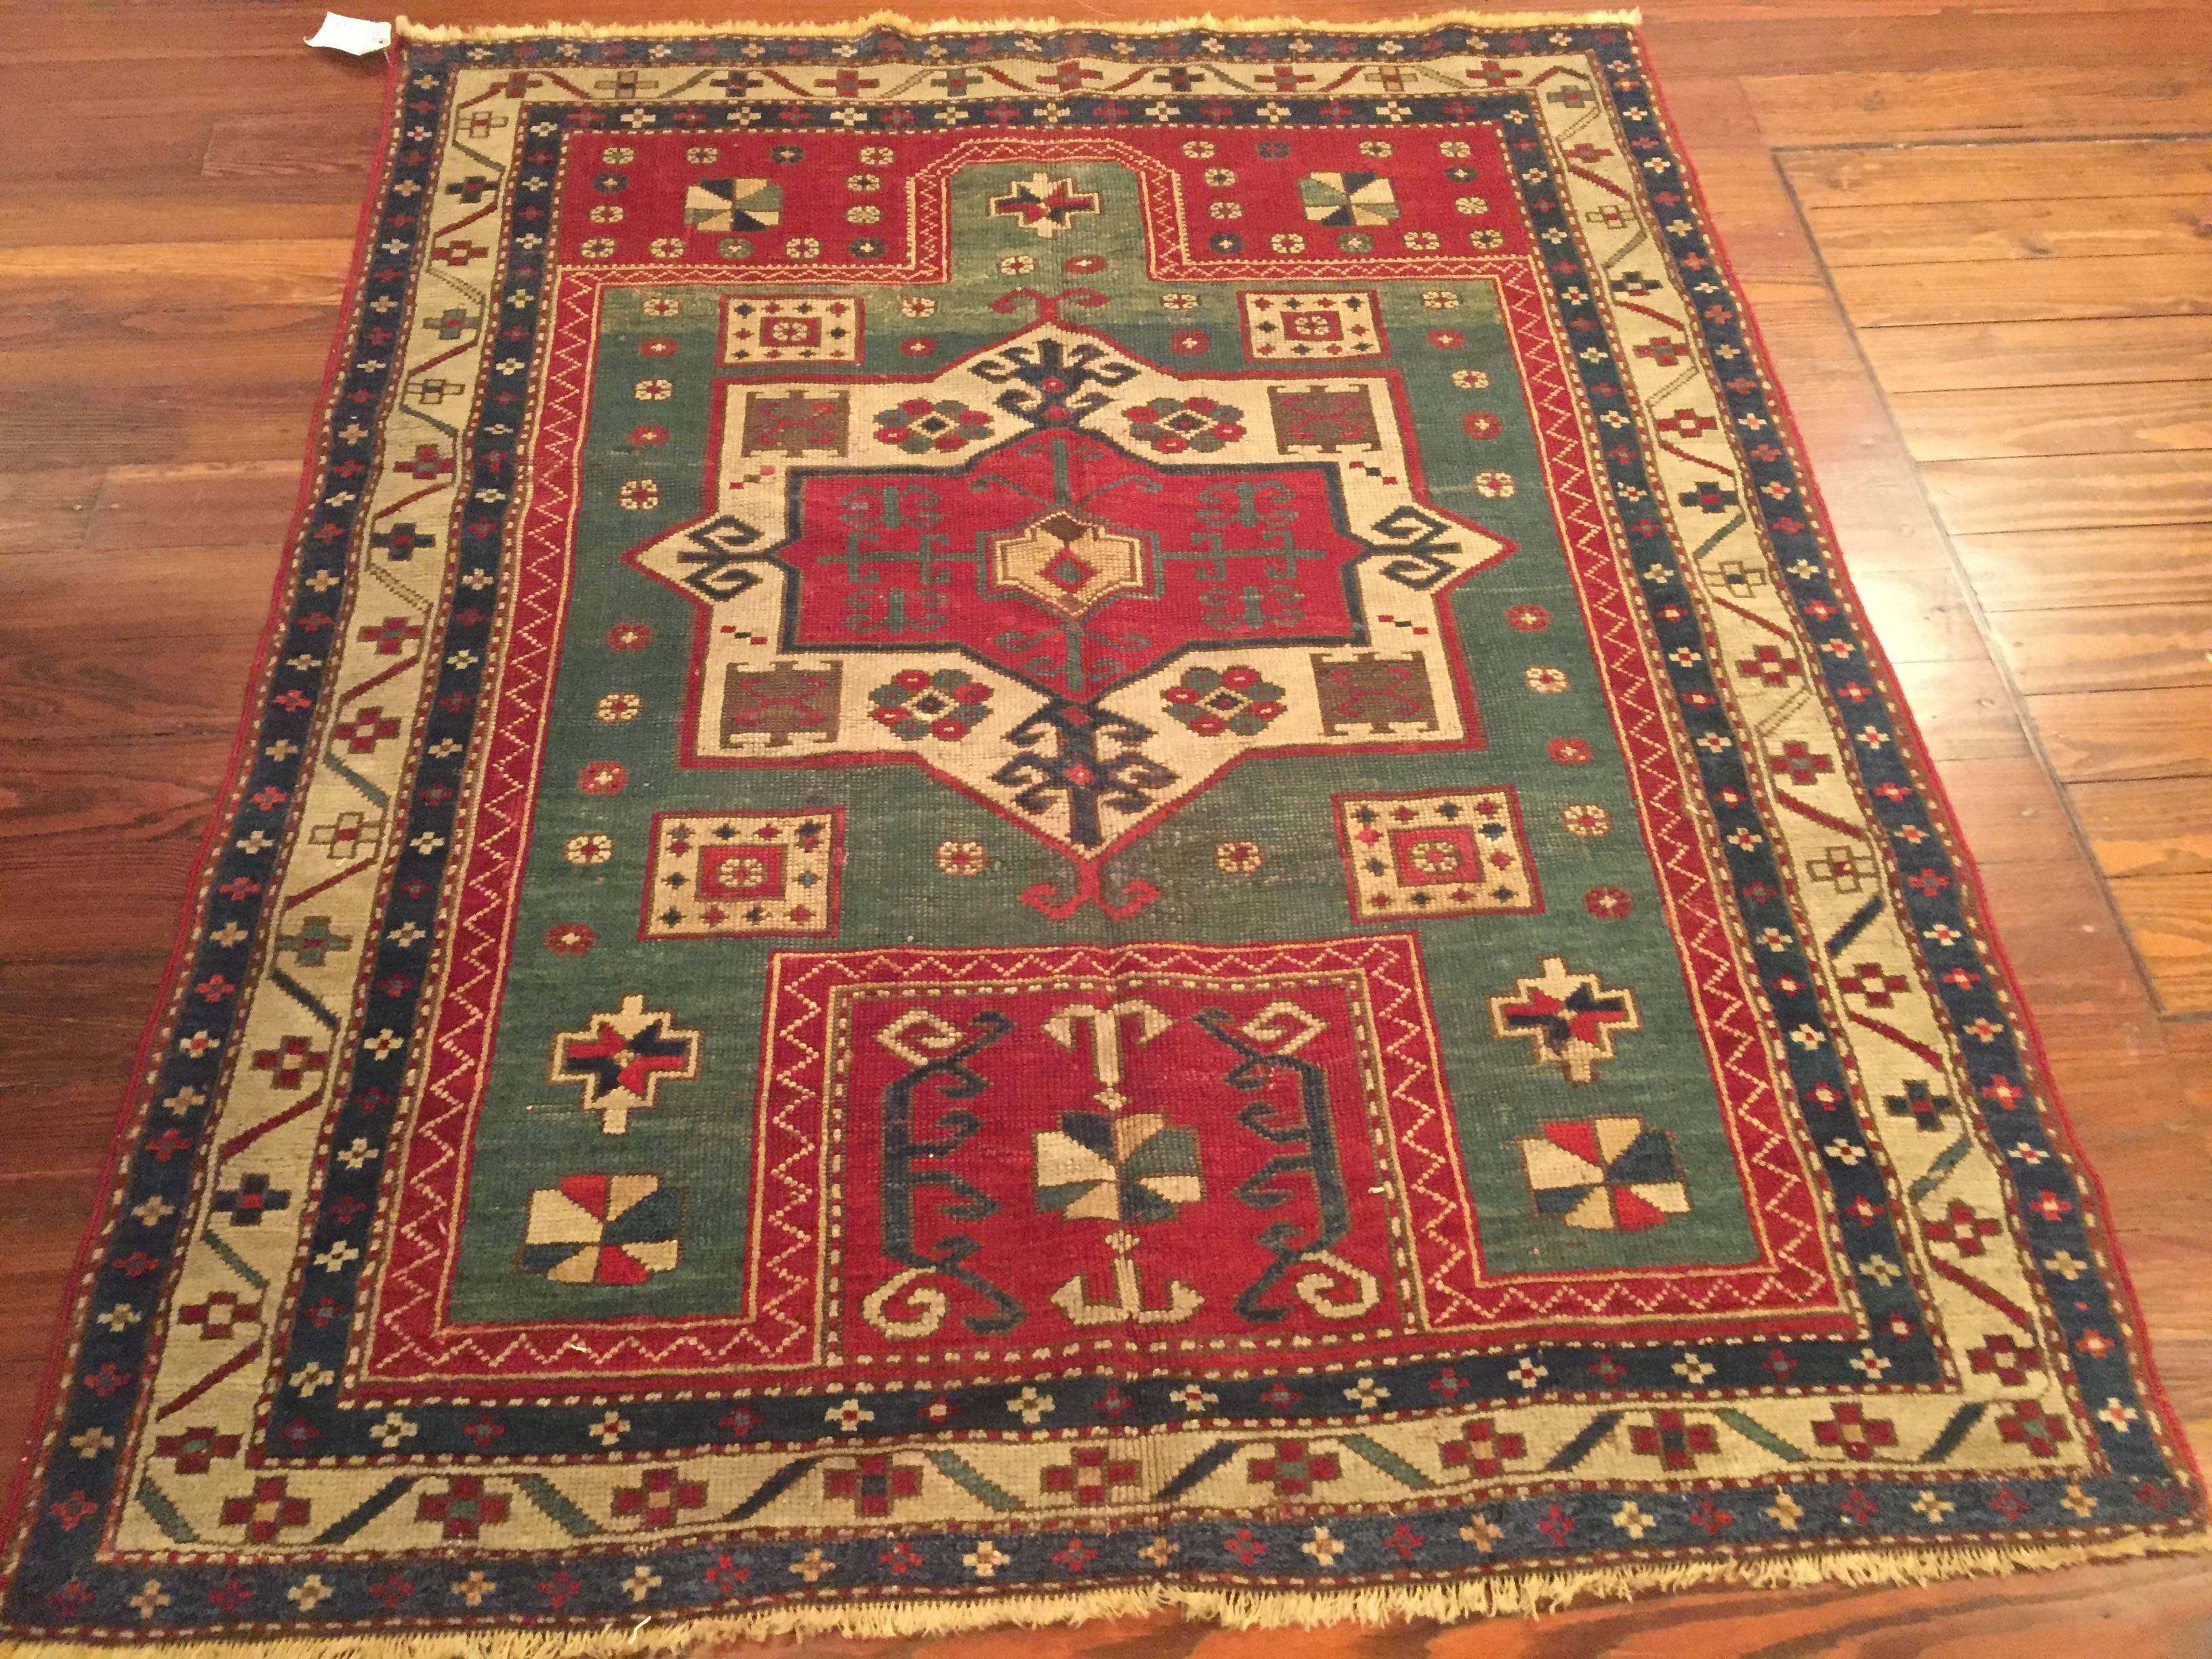 An antique Caucasian Kazak rug with prayer design, circa 1890.